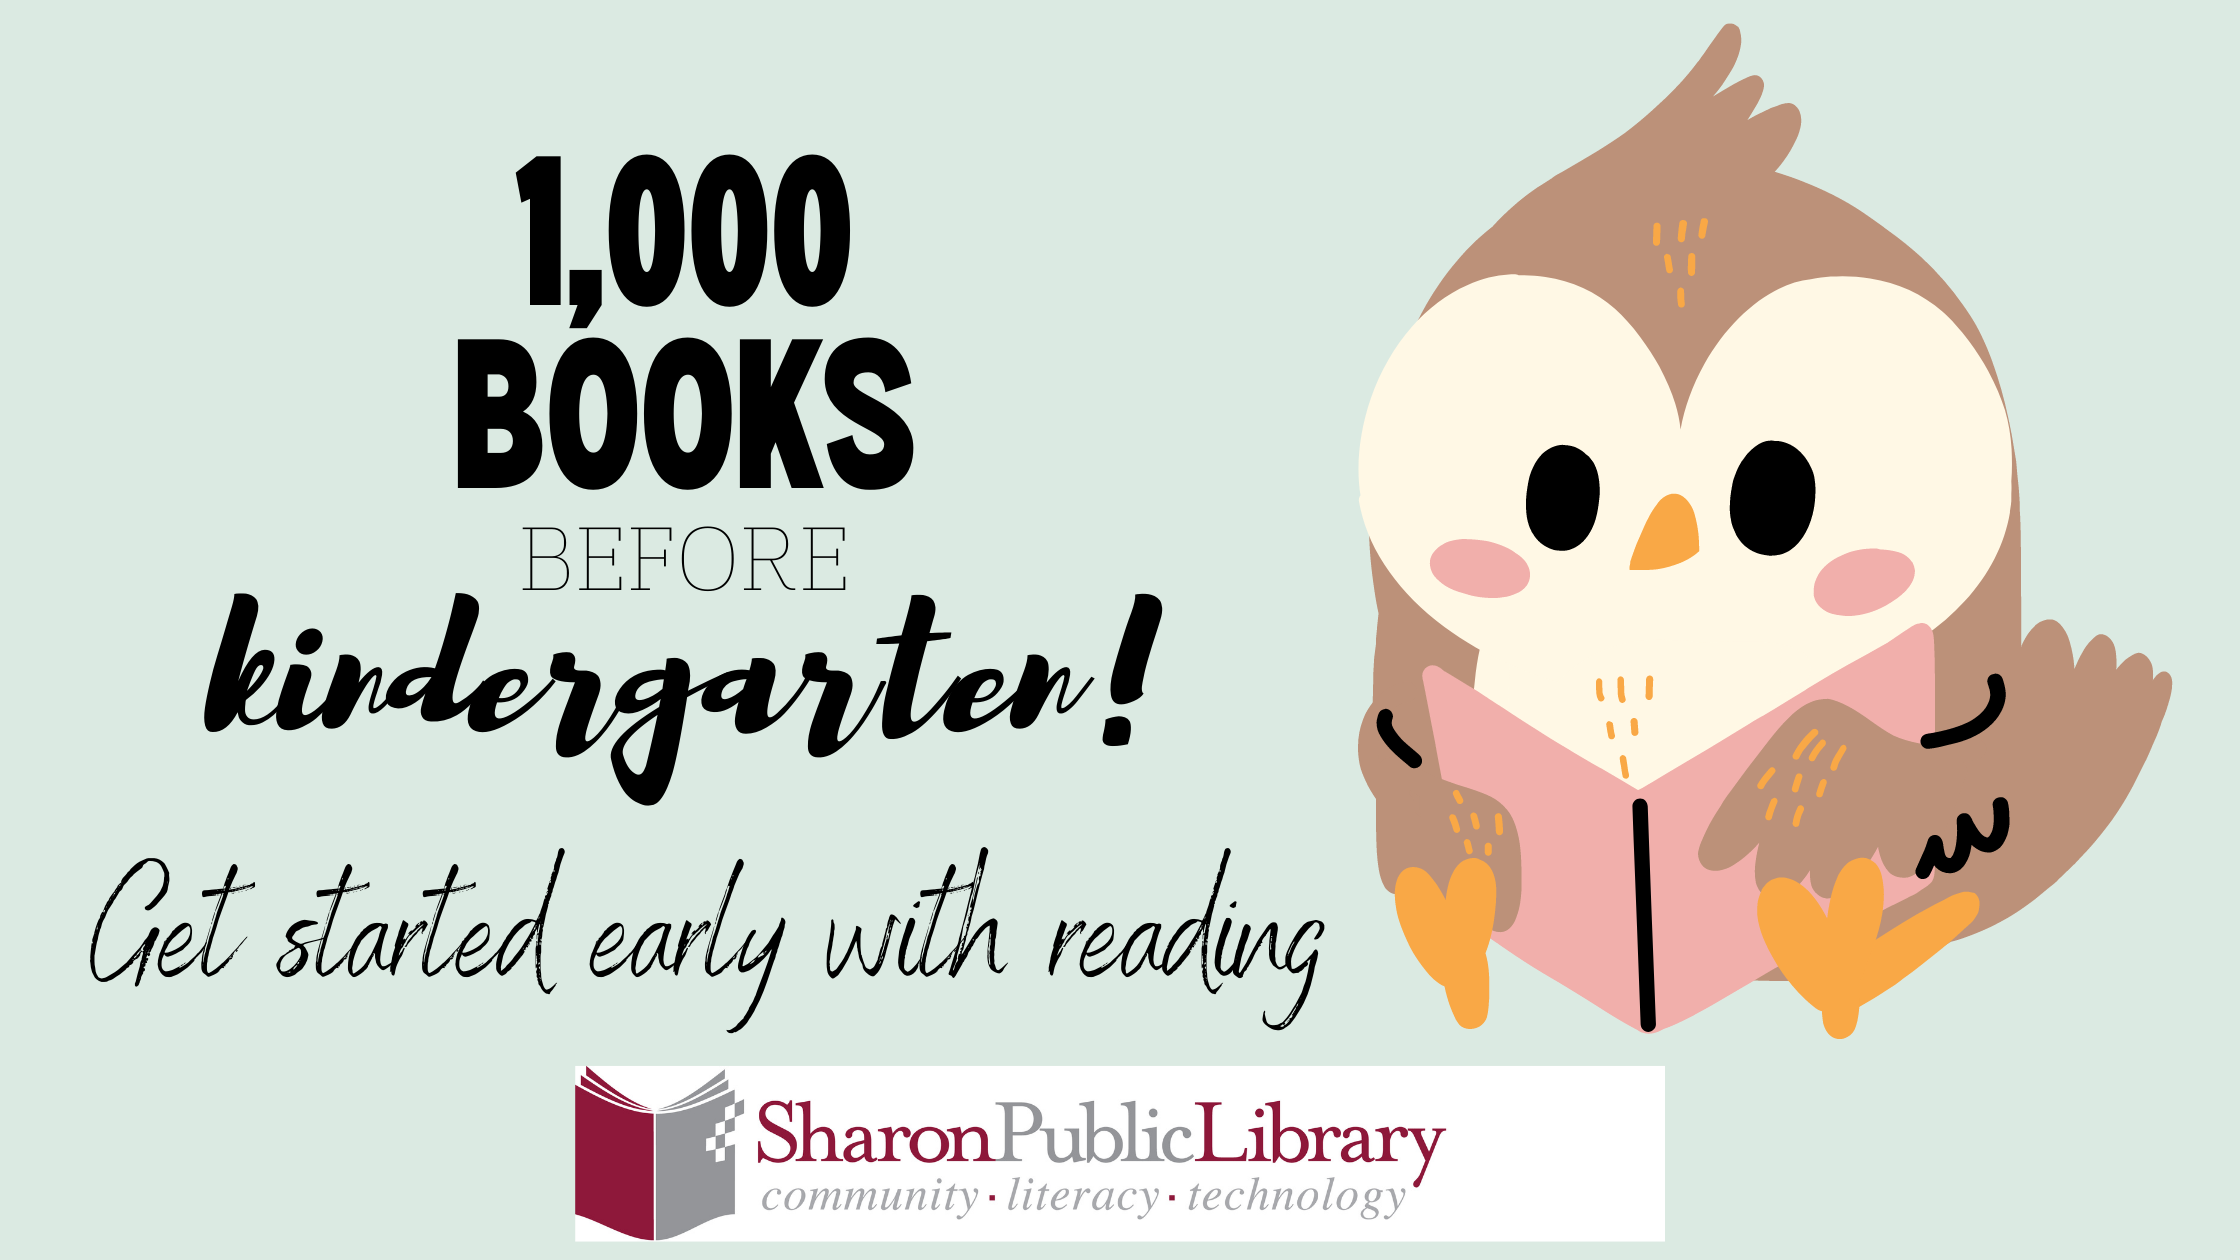 1000 Books Before Kindergarten logo featuring cartoon owl reading a book